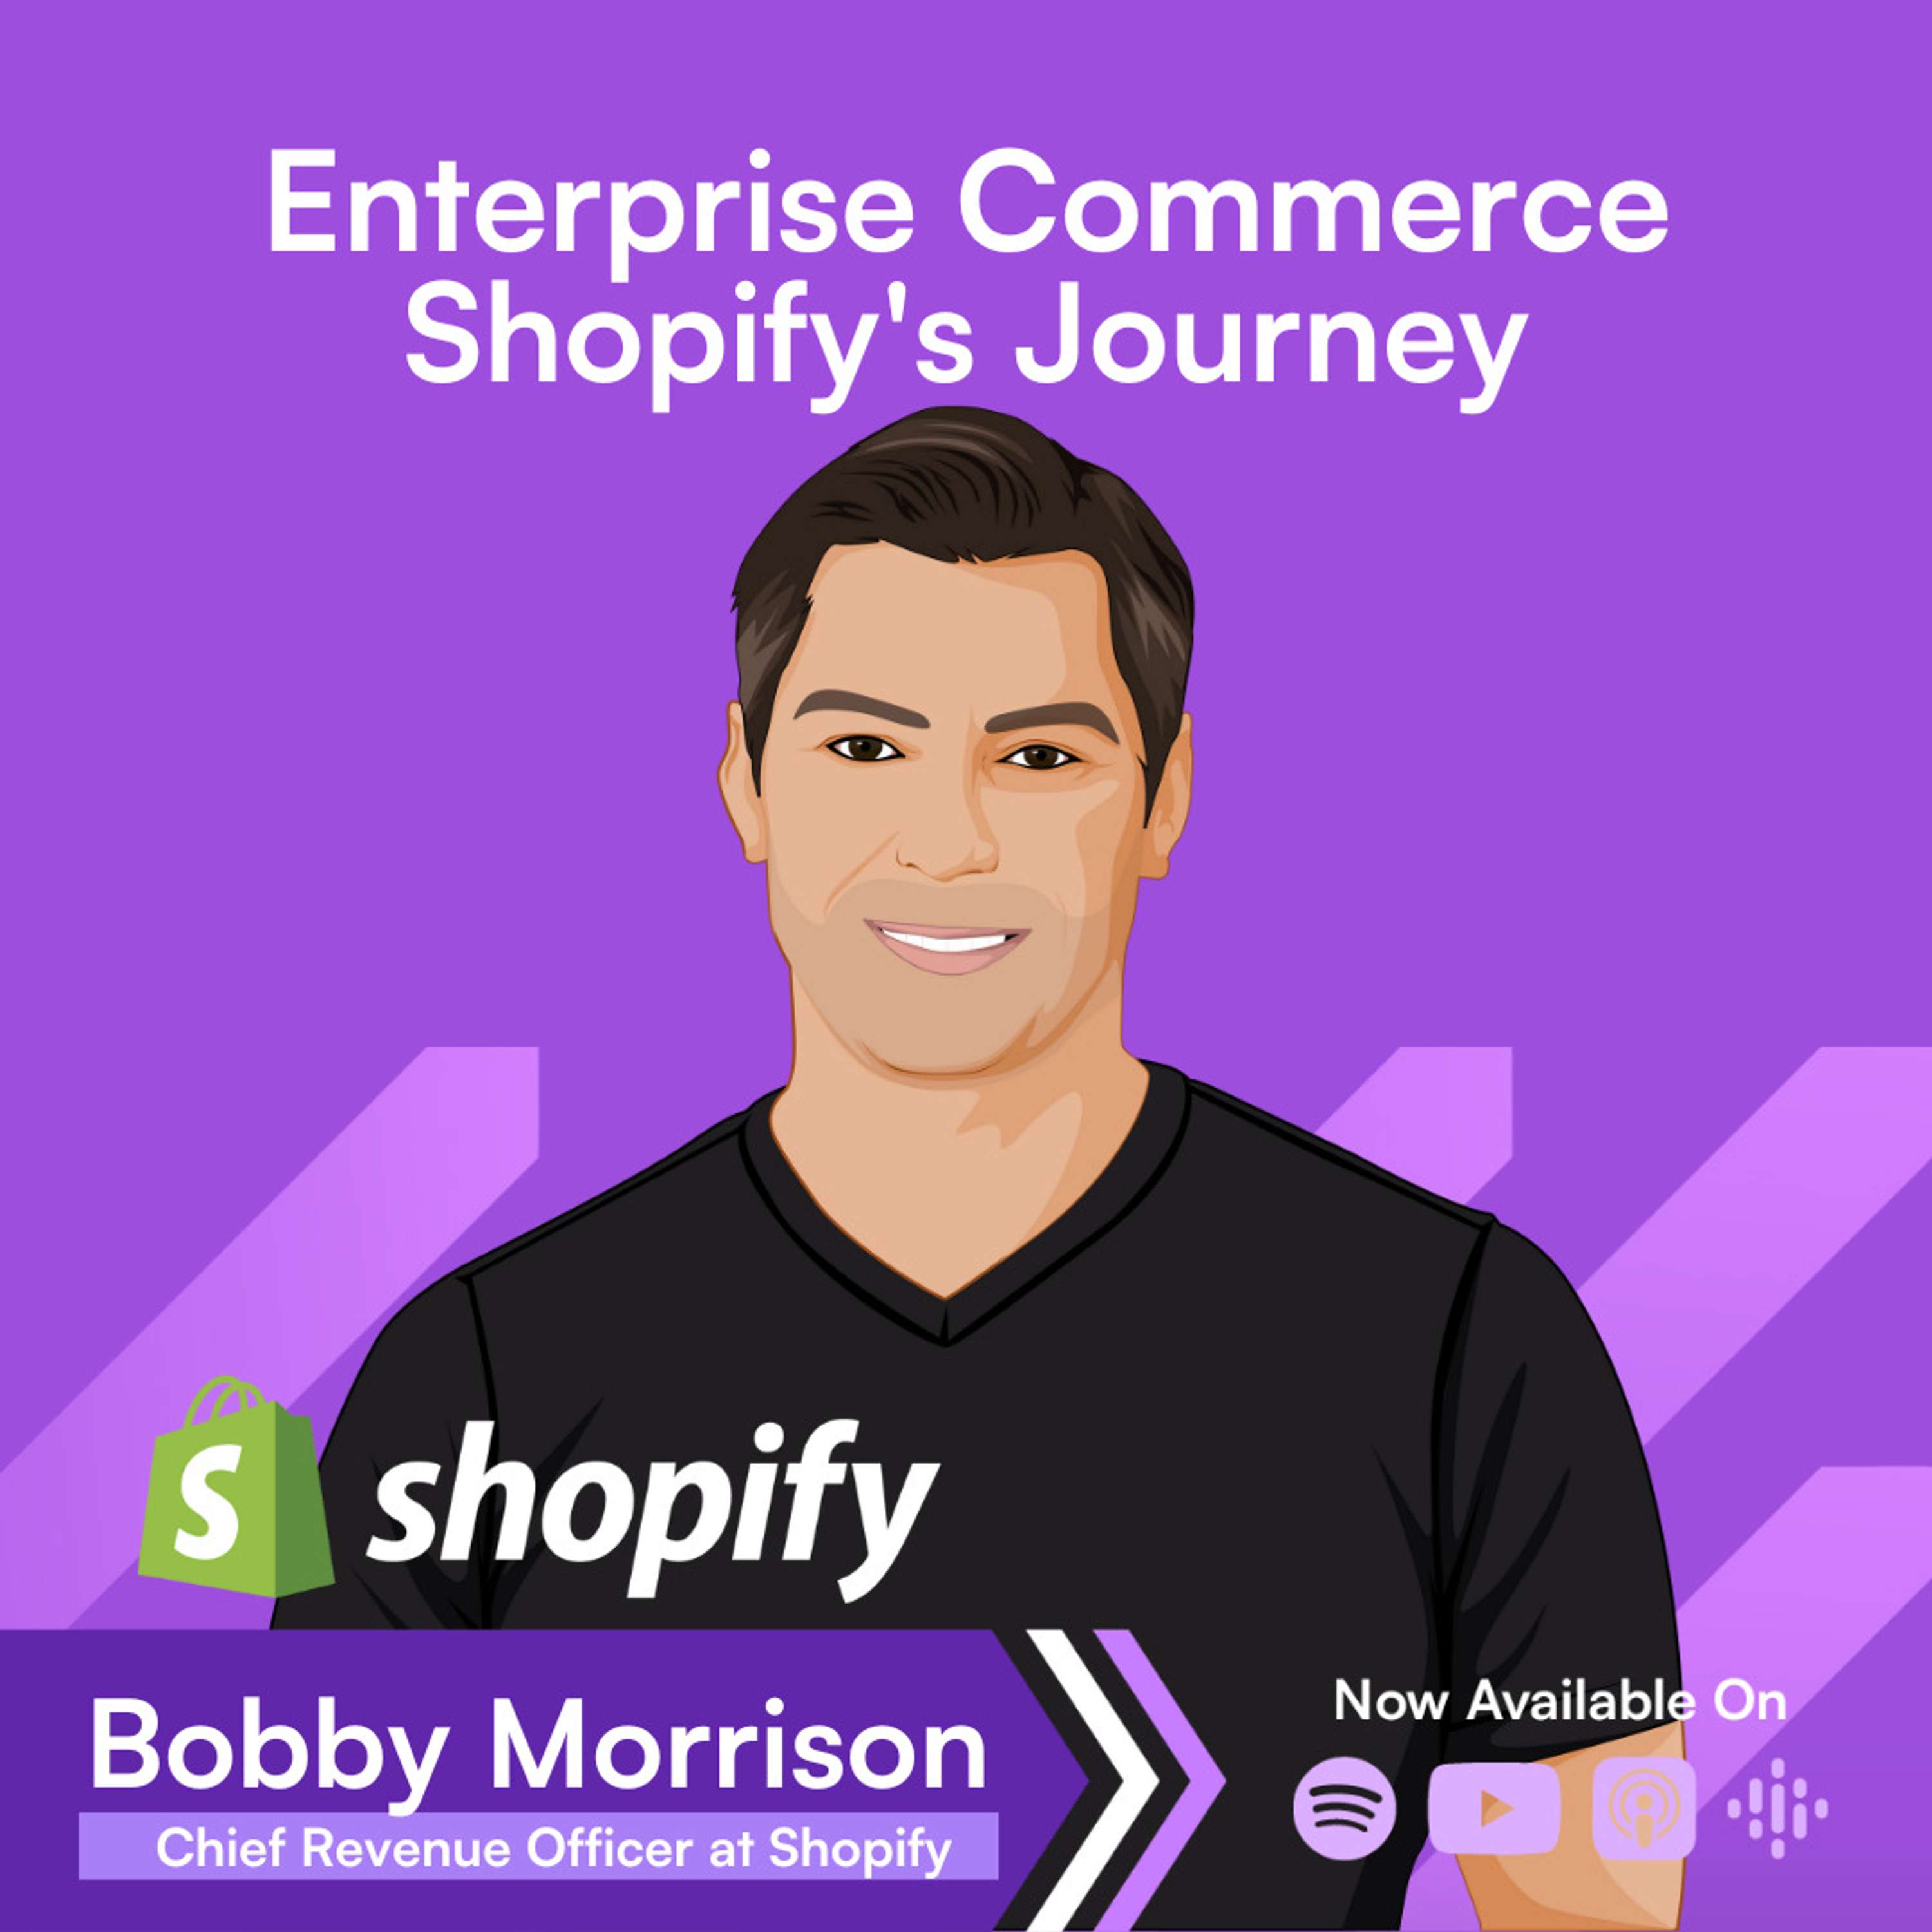 How Shopify is Doubling Down on Enterprise Commerce → Bobby Morrison